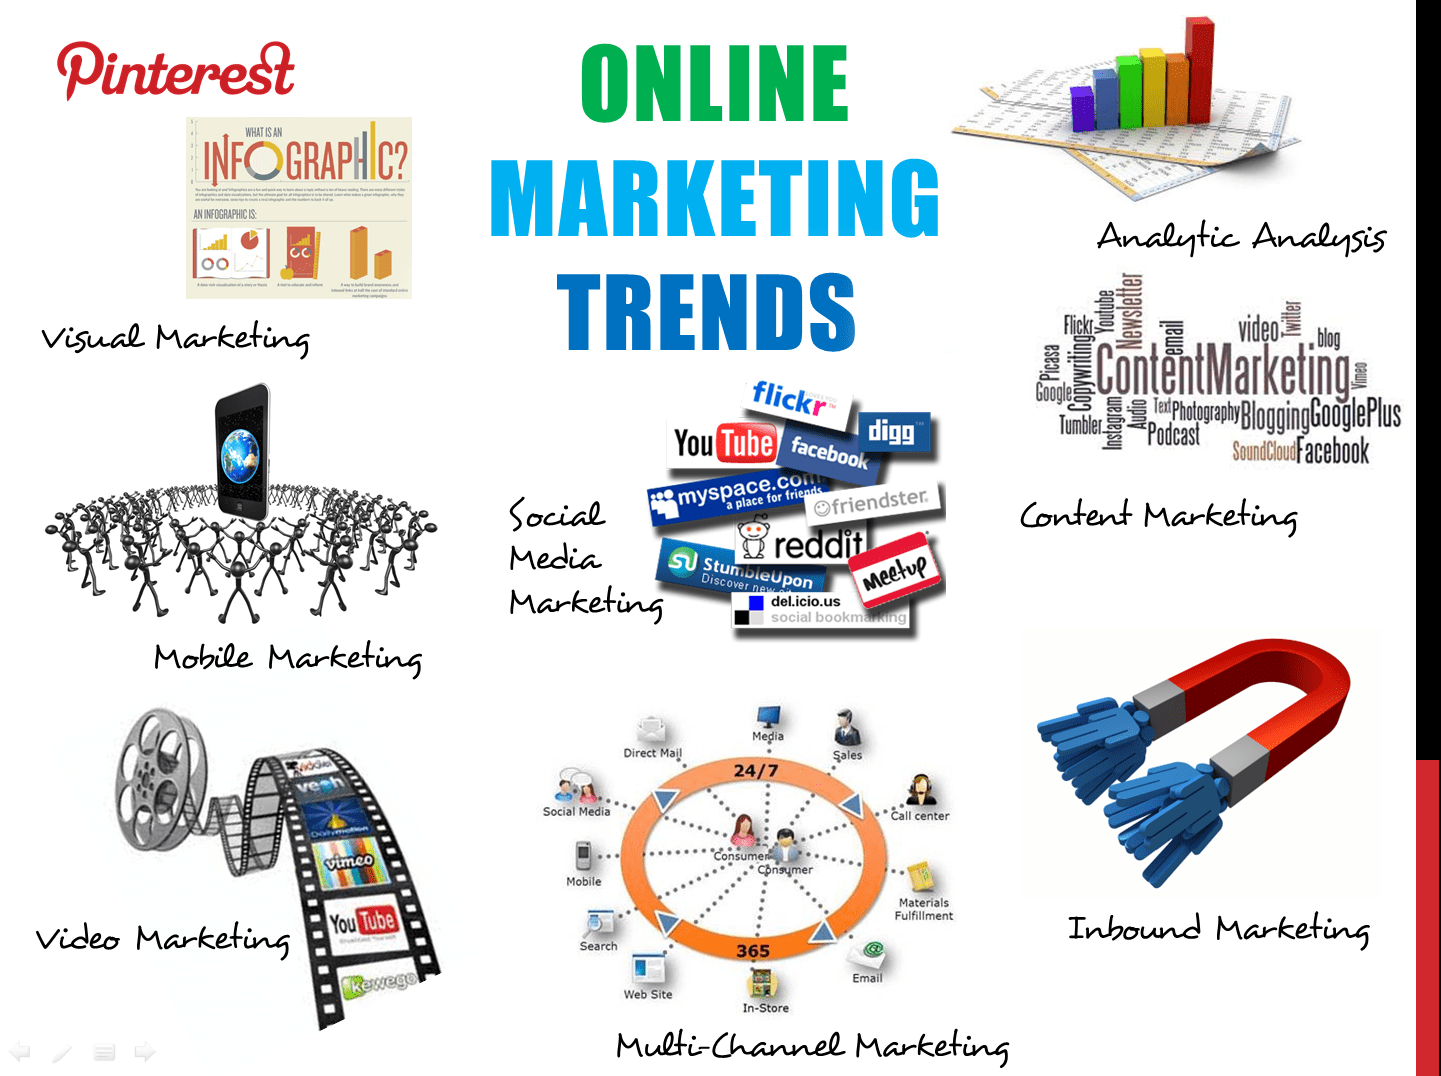 5 Online Marketing Trends